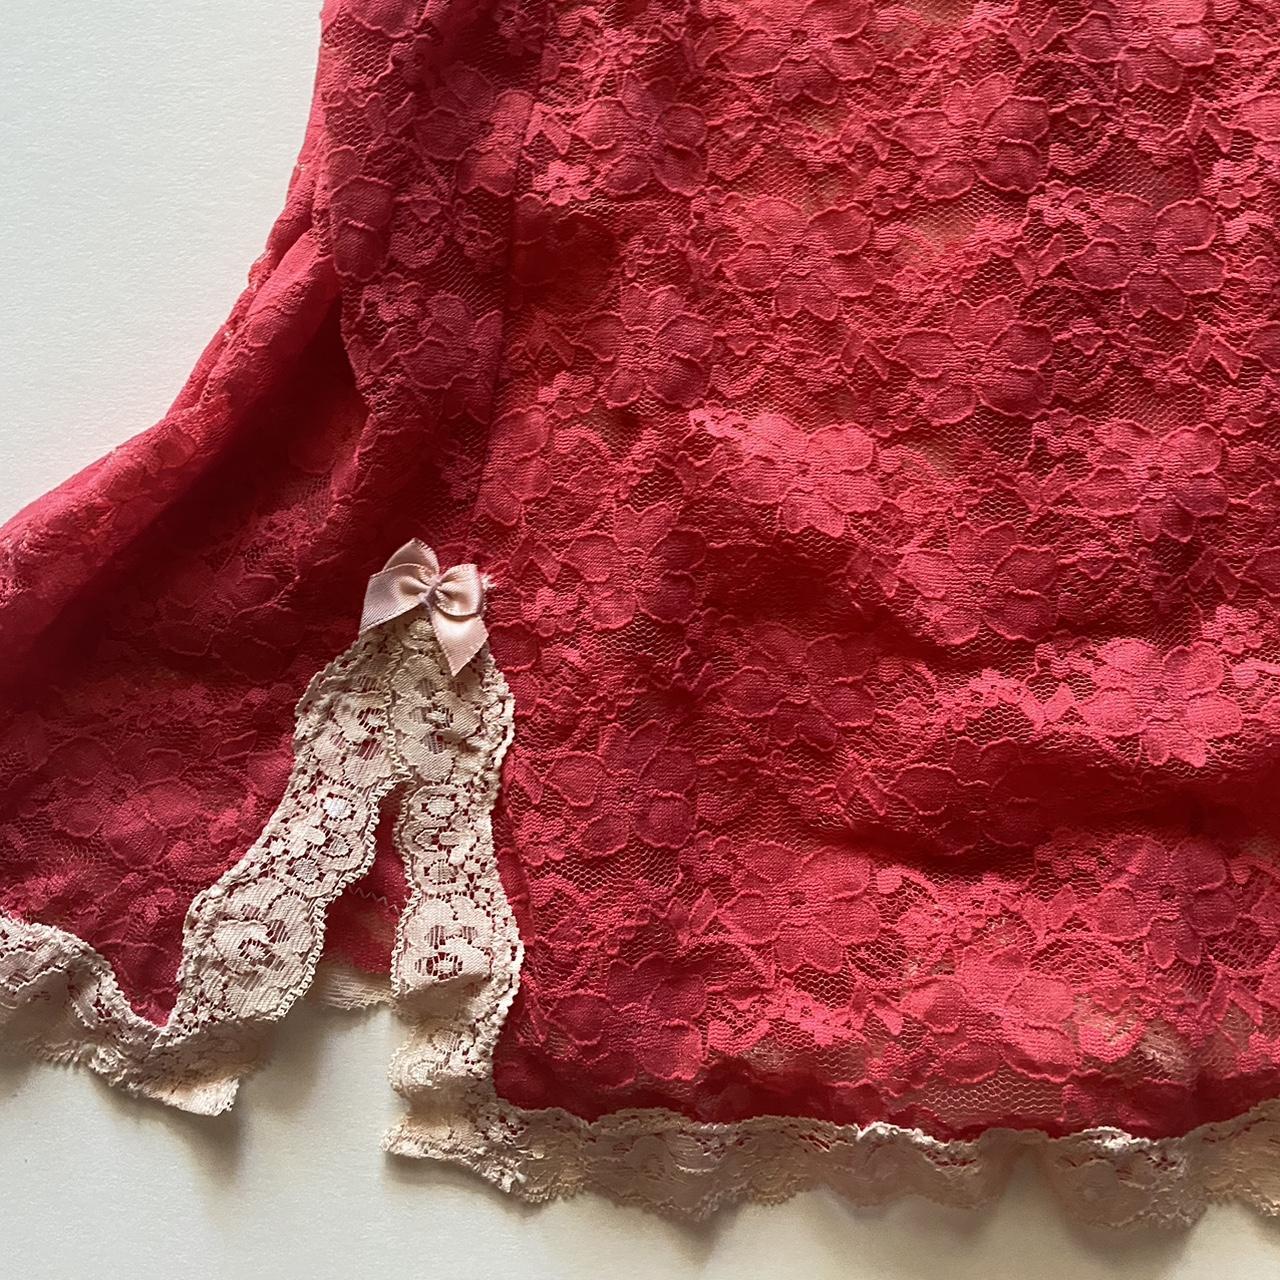 Jessica Simpson lingerie dress 💕 color is more pink - Depop